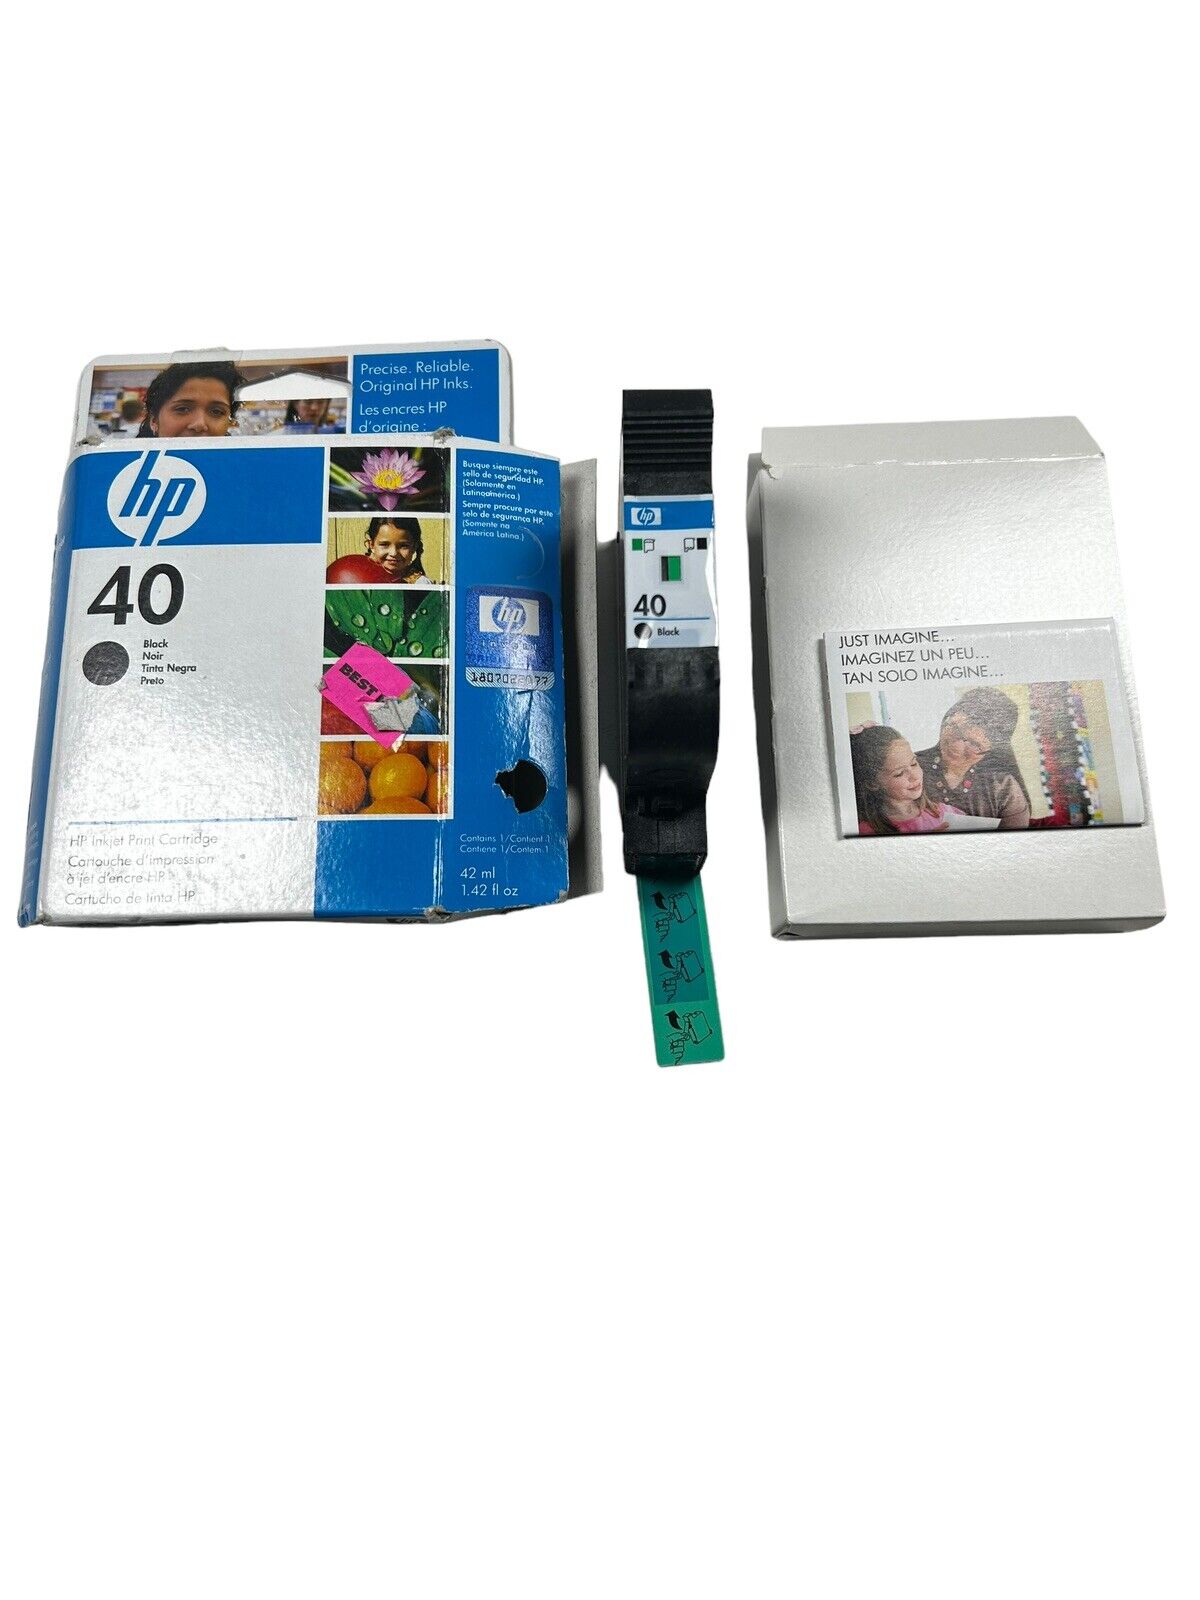 HP Genuine Ink 40 Black 51640A DeskJet Expired 12/2009 Open Box